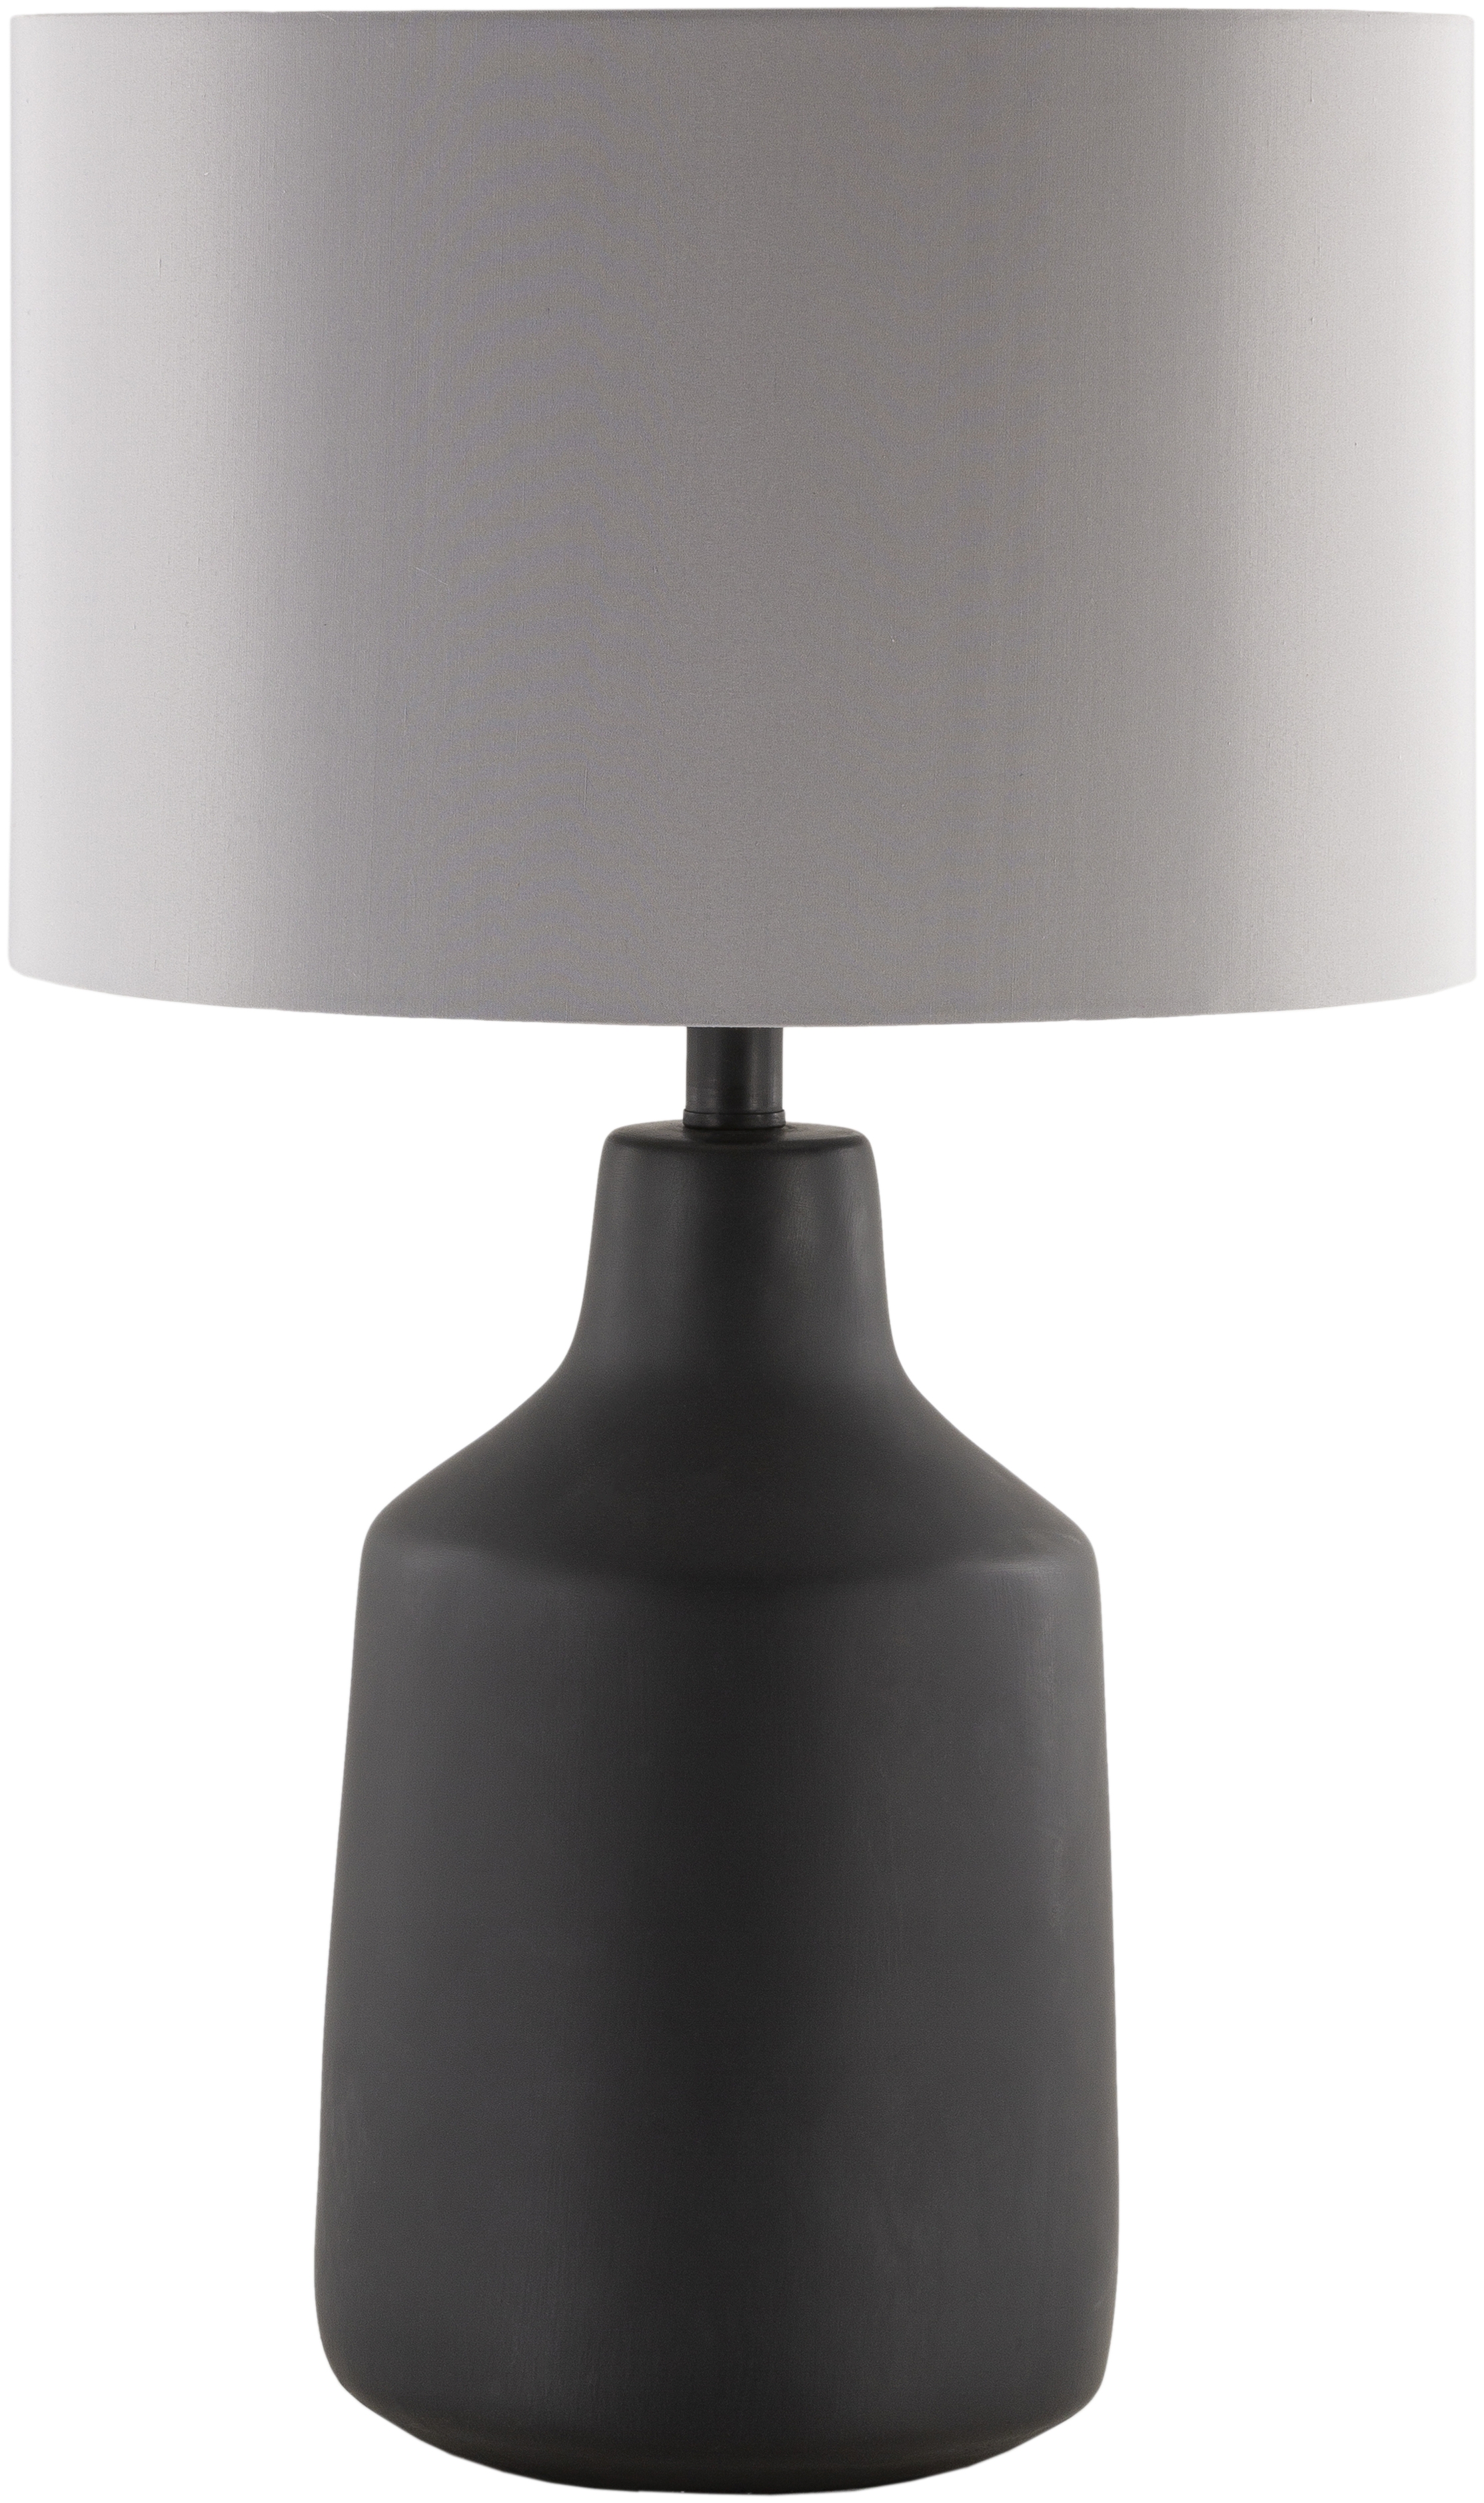 Foreman Table Lamp - Image 0